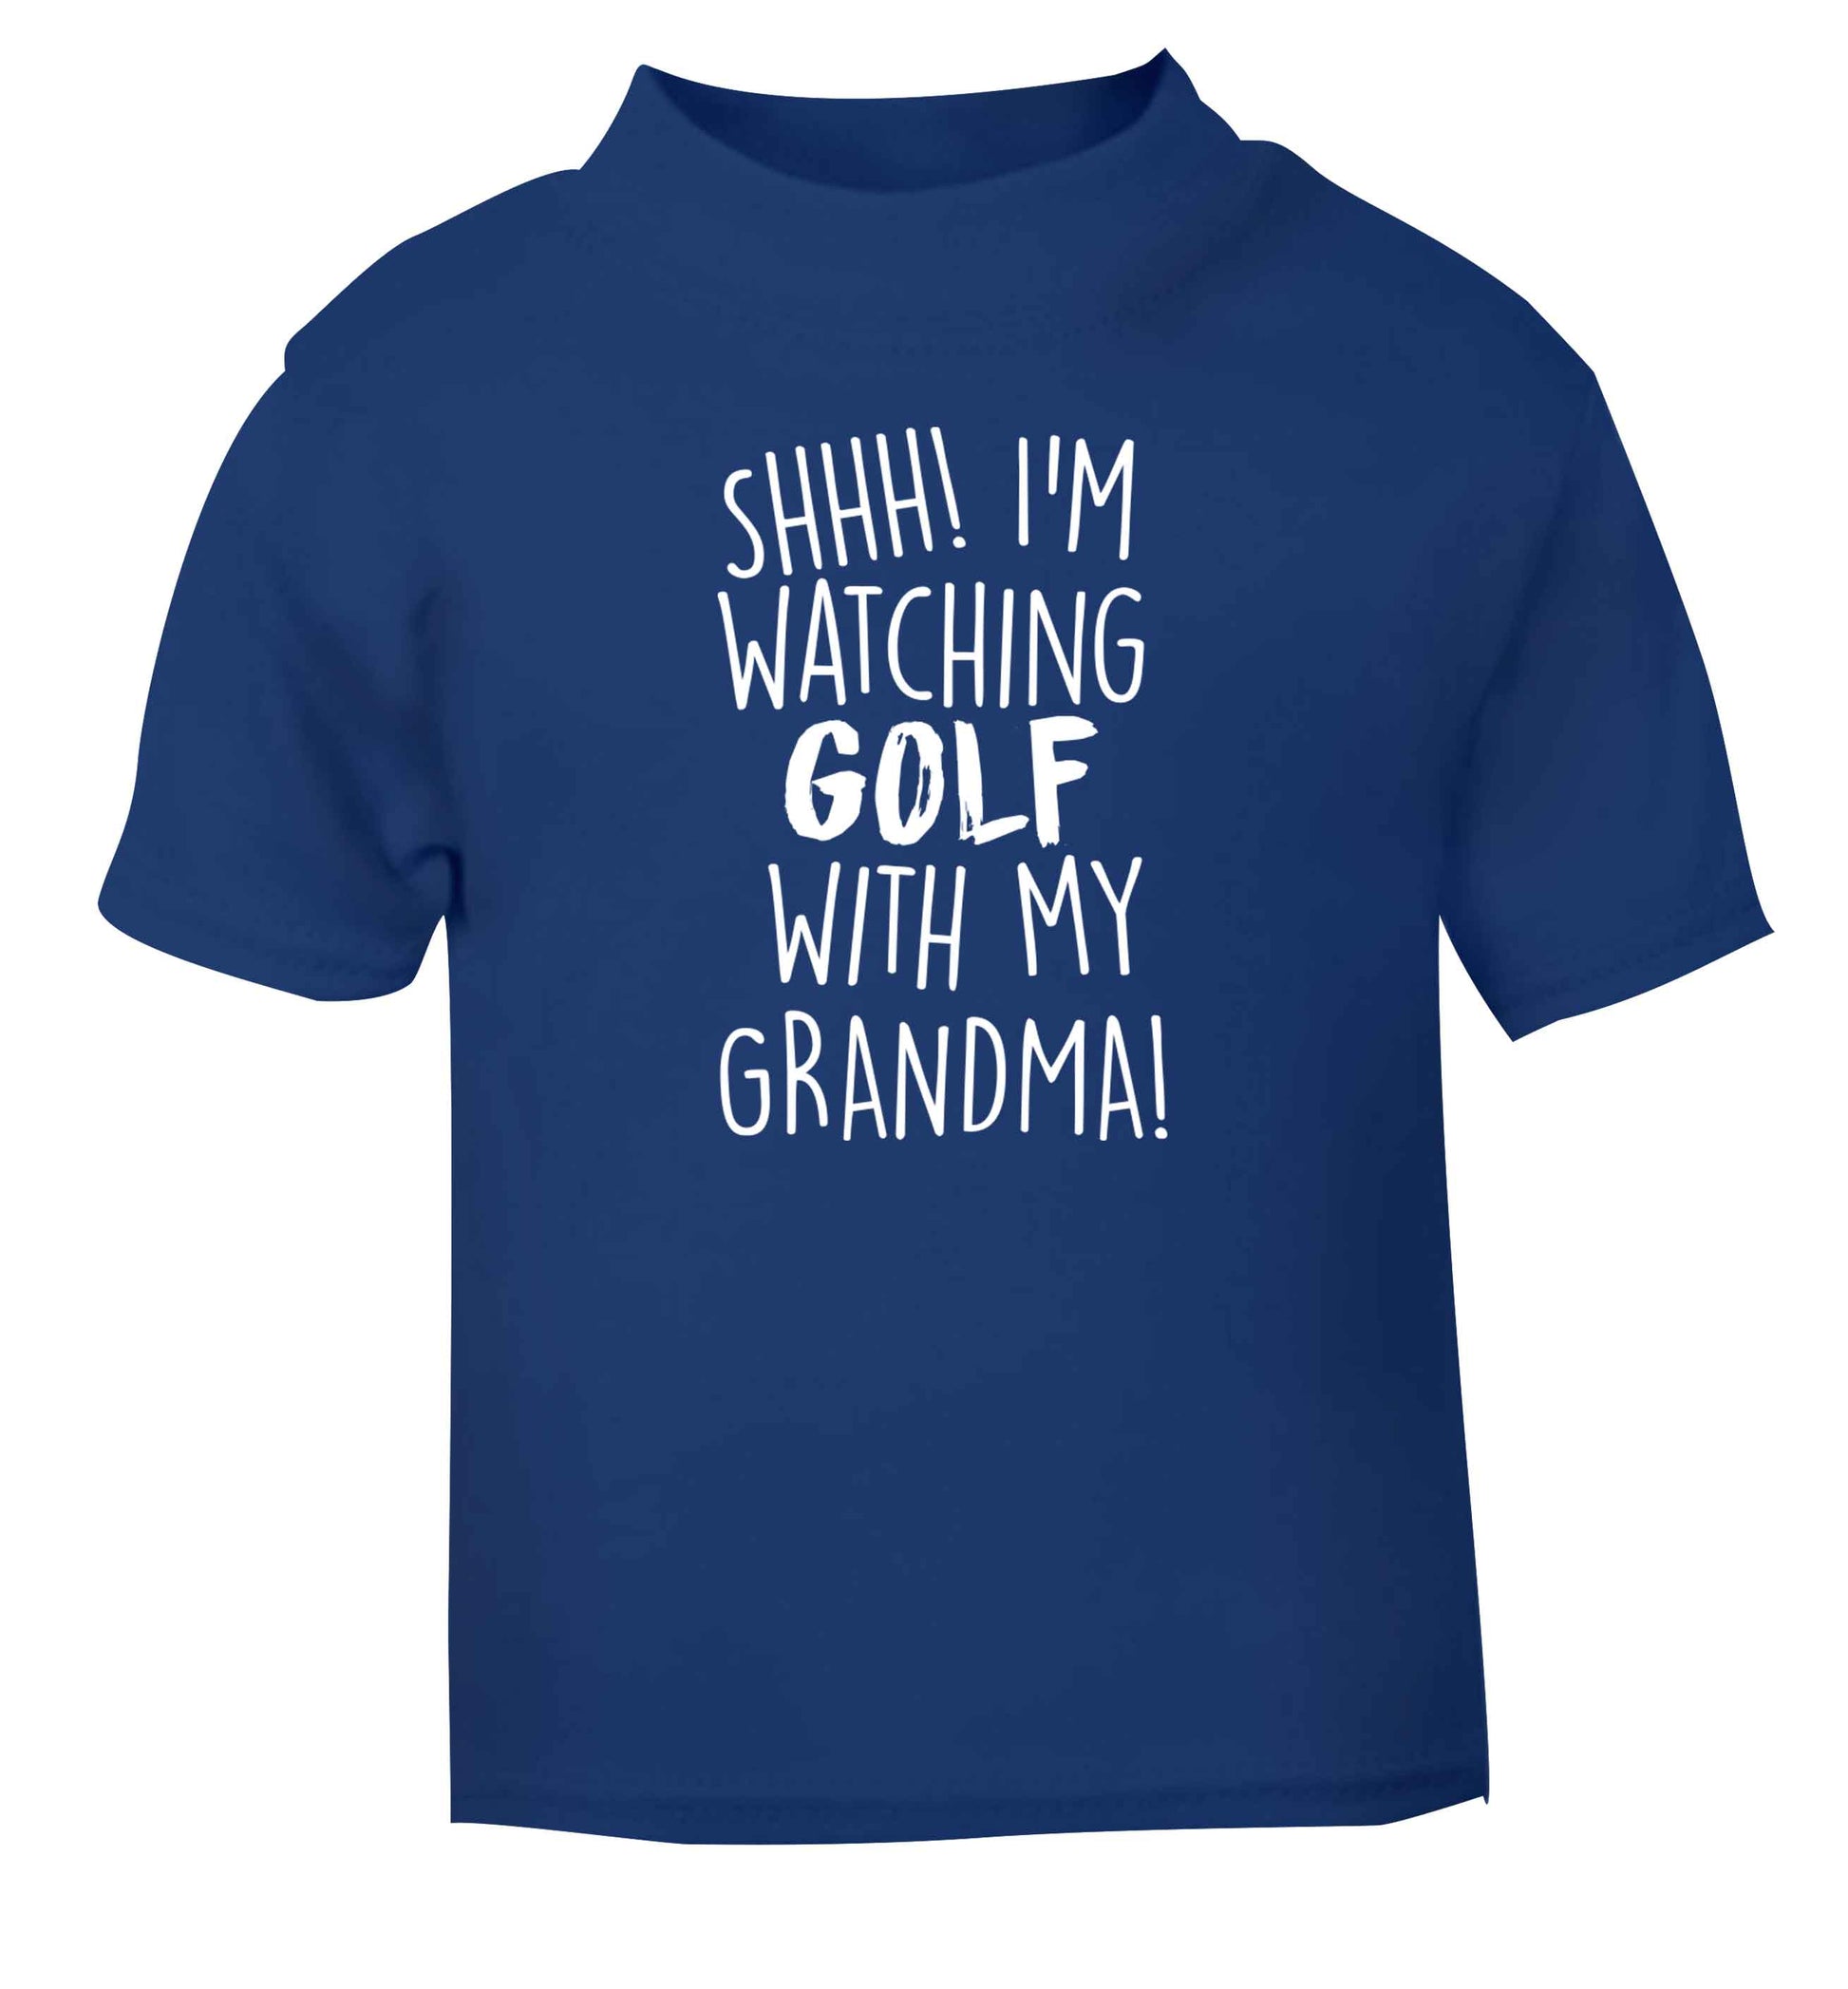 Shh I'm watching golf with my grandma blue Baby Toddler Tshirt 2 Years